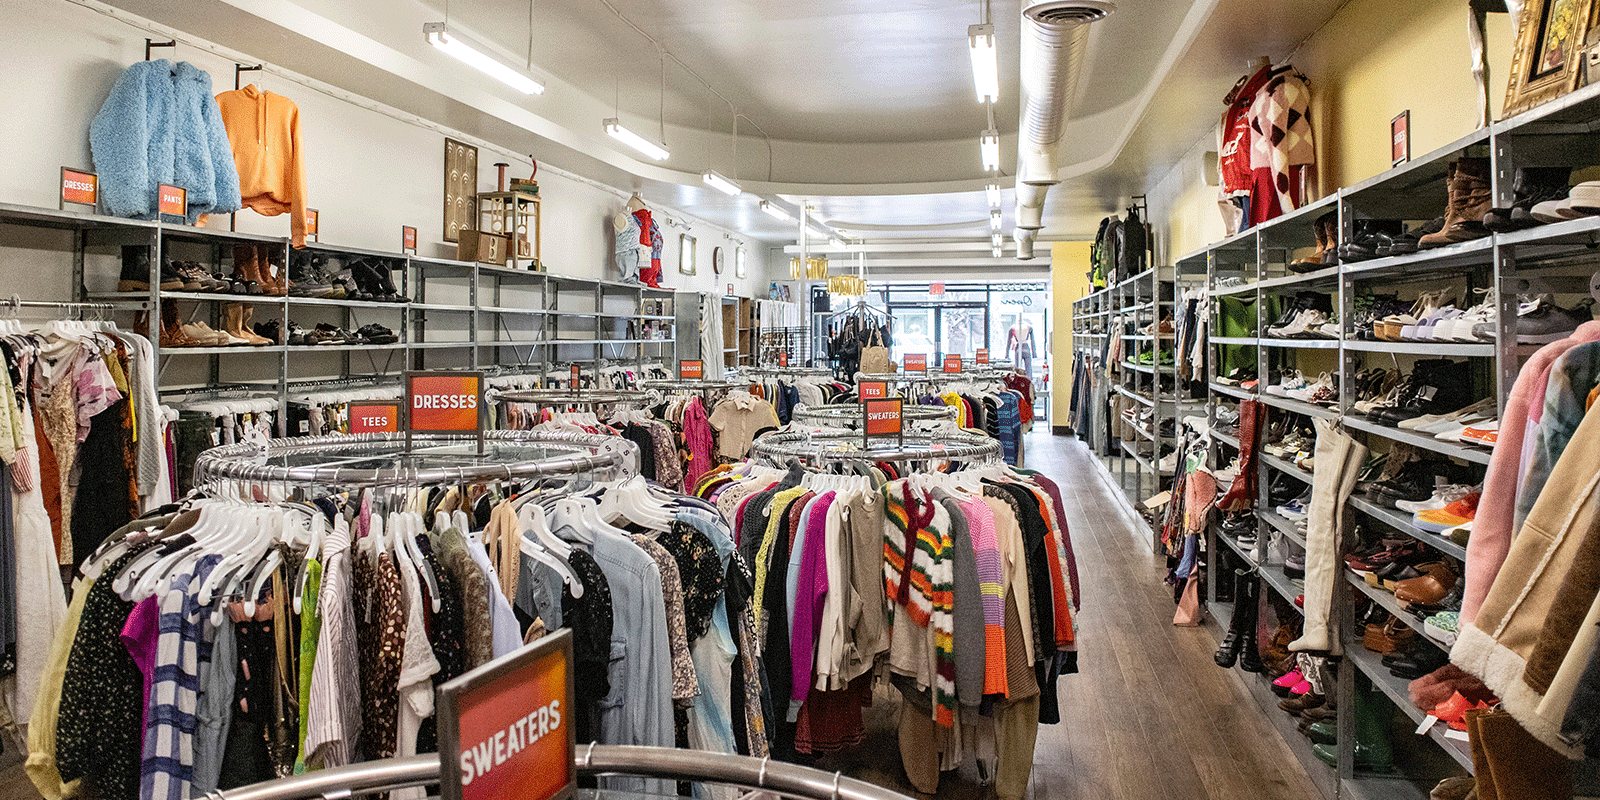 Buffalo Exchange Pasadena interior with racks of clothes